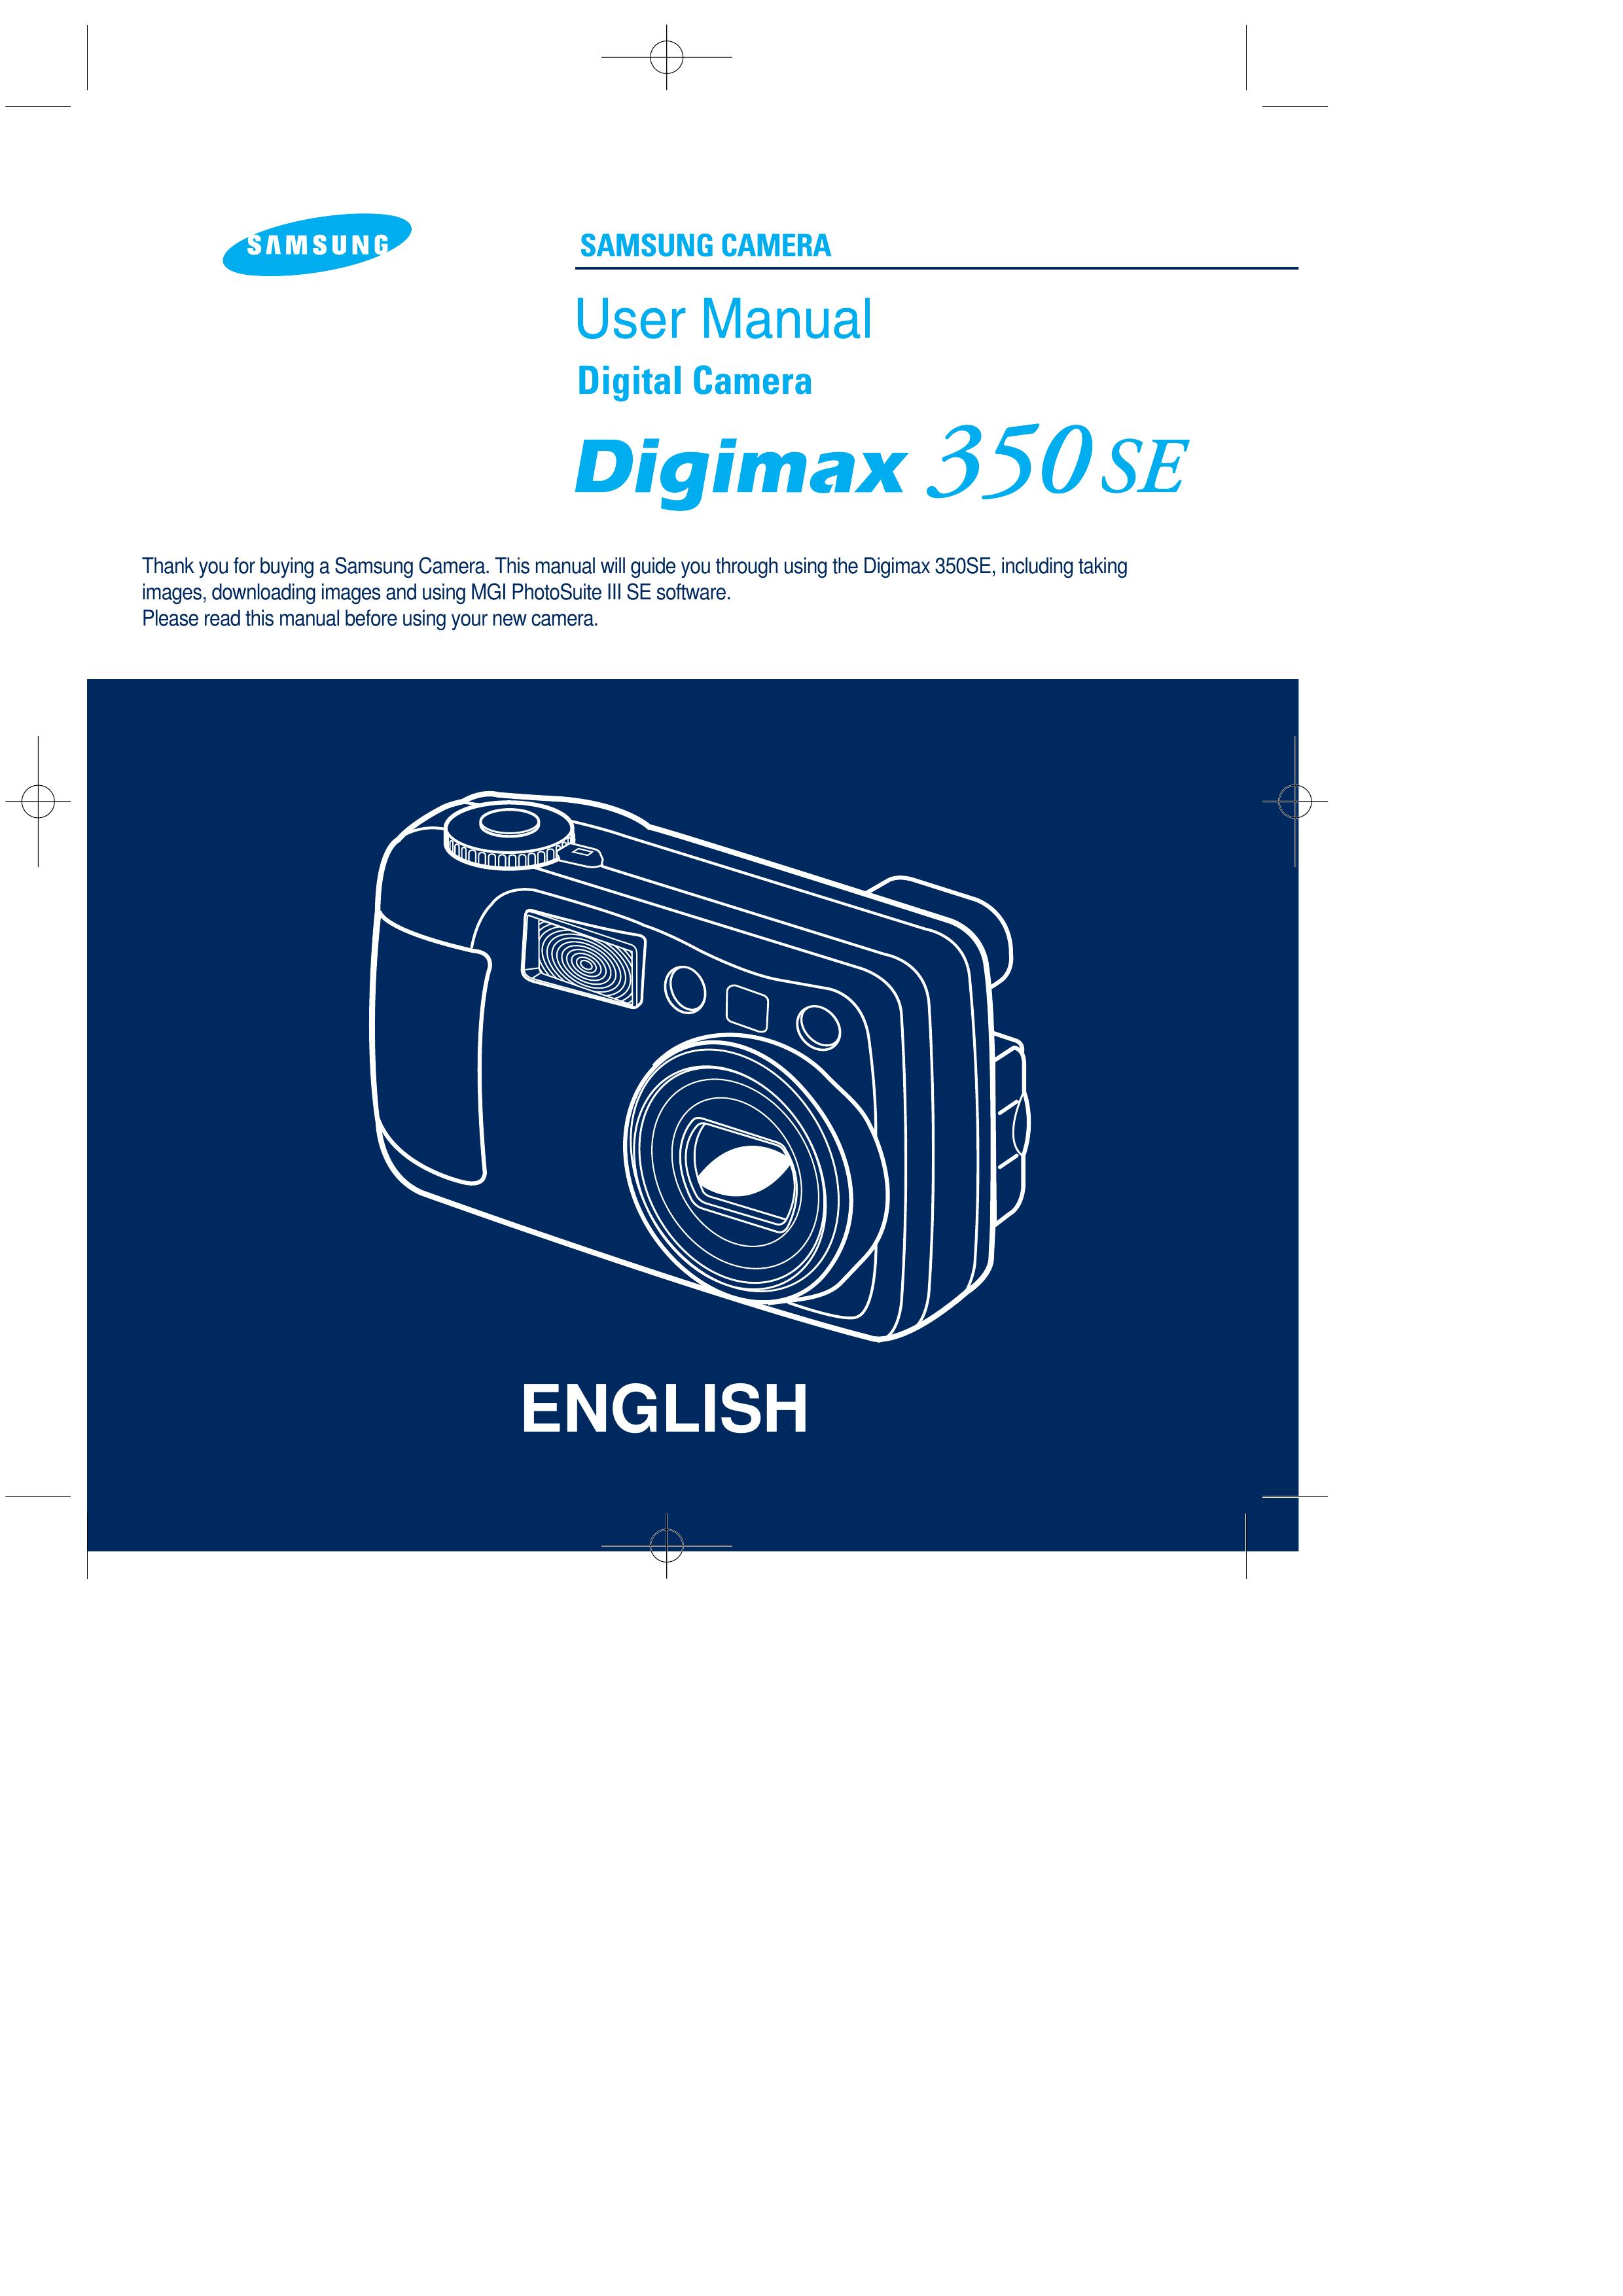 Harman-Kardon 350SE Digital Camera User Manual